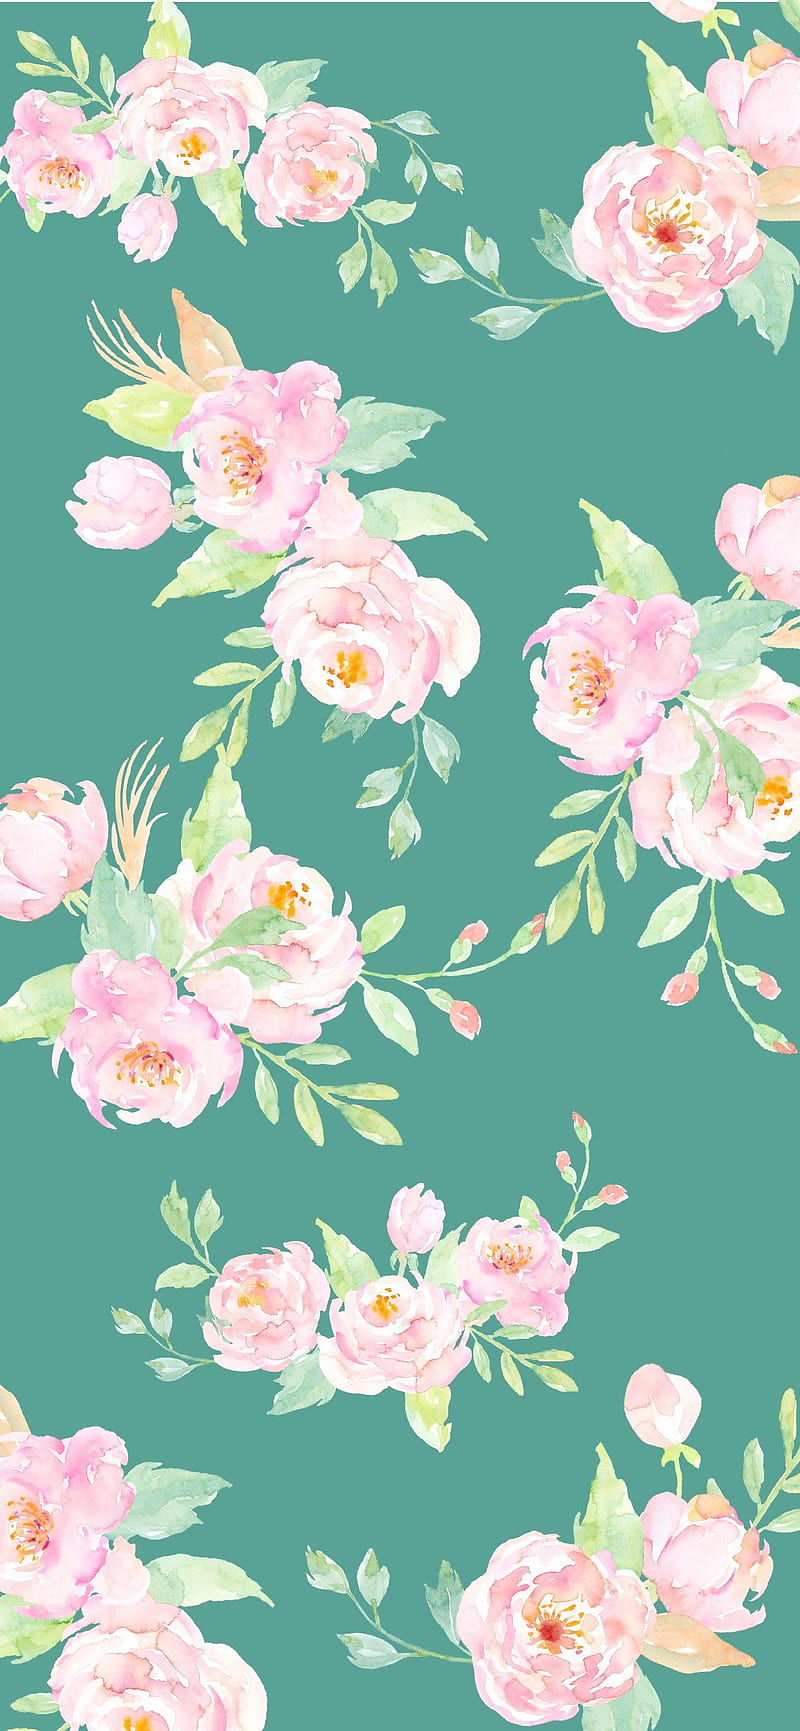 31 Aesthetic Flowers Simple Wallpapers  WallpaperSafari